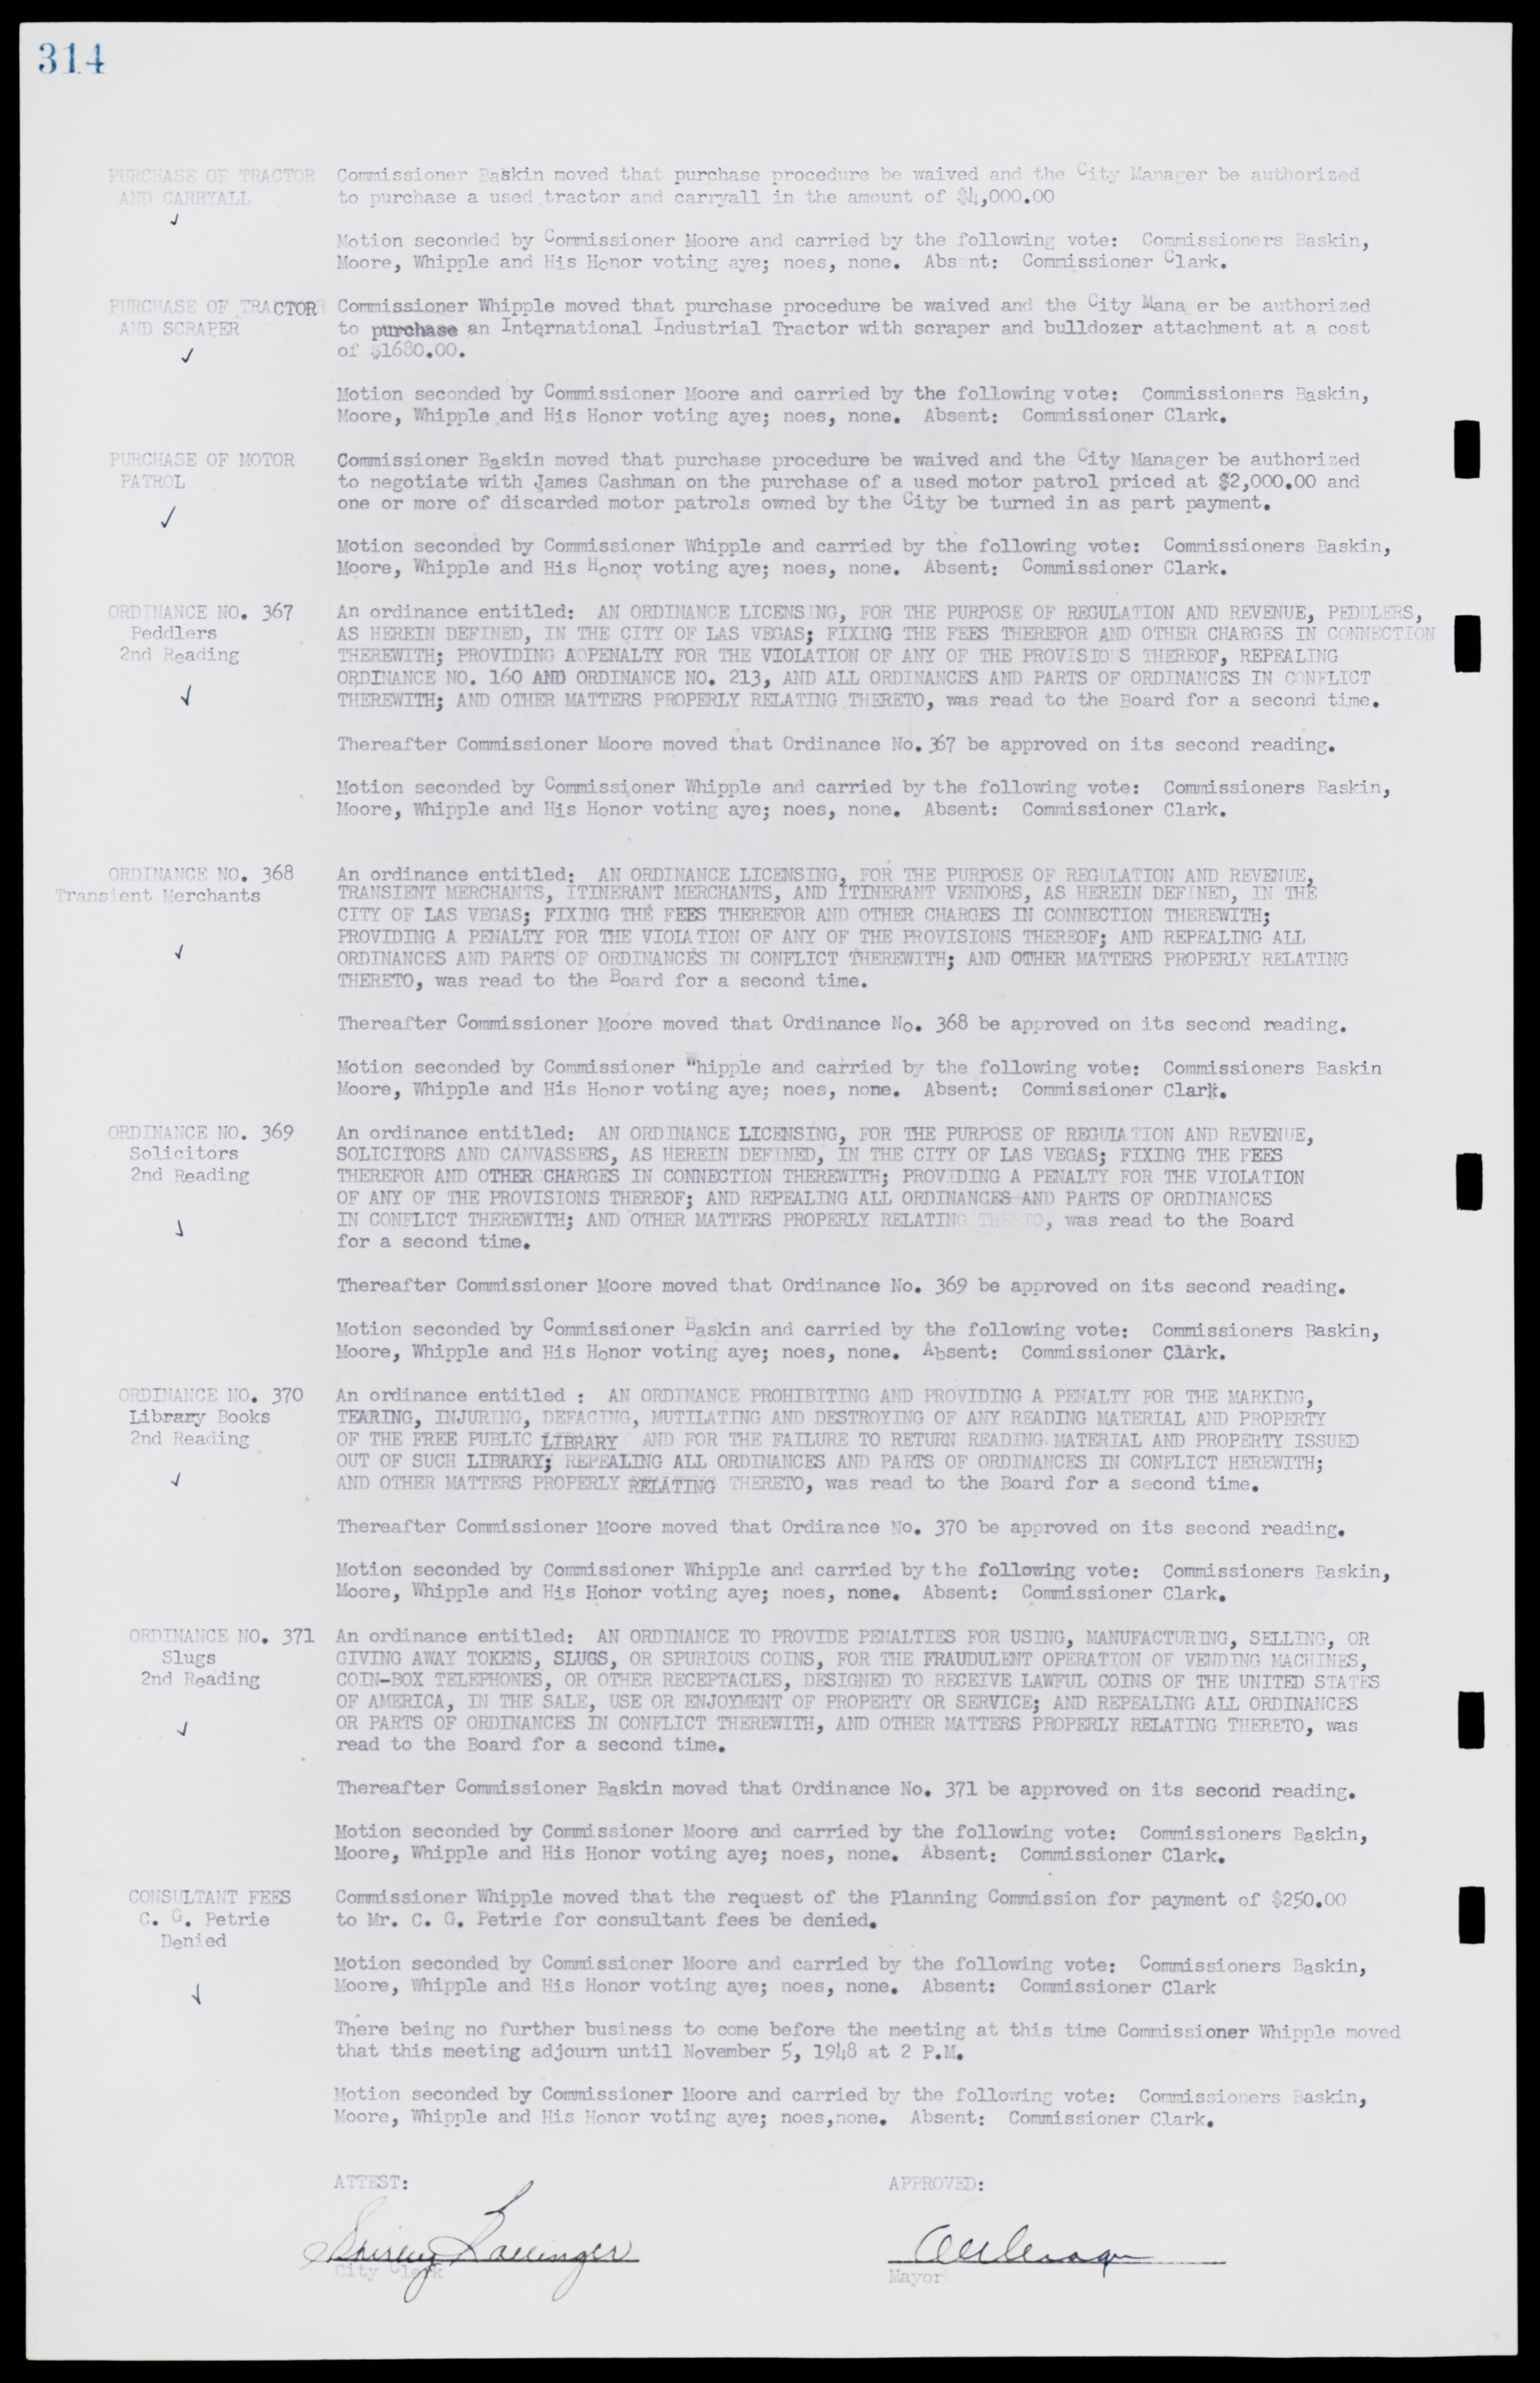 Las Vegas City Commission Minutes, January 7, 1947 to October 26, 1949, lvc000006-338